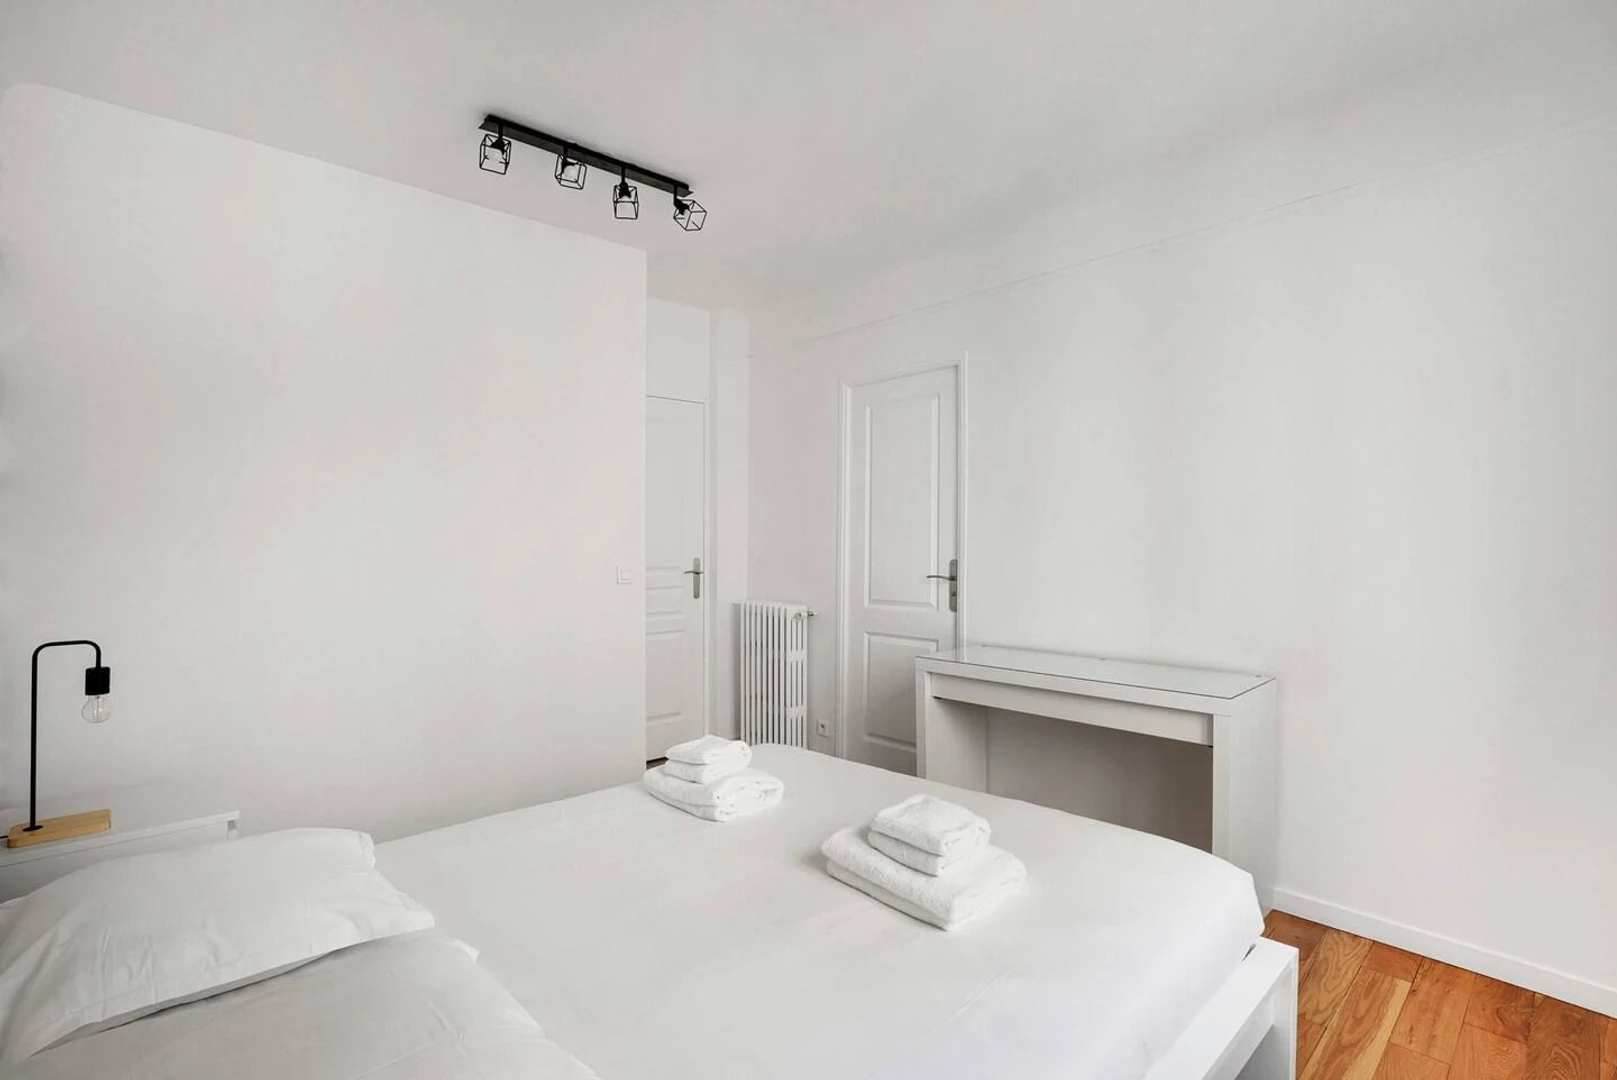 Cheap private room in Boulogne-billancourt